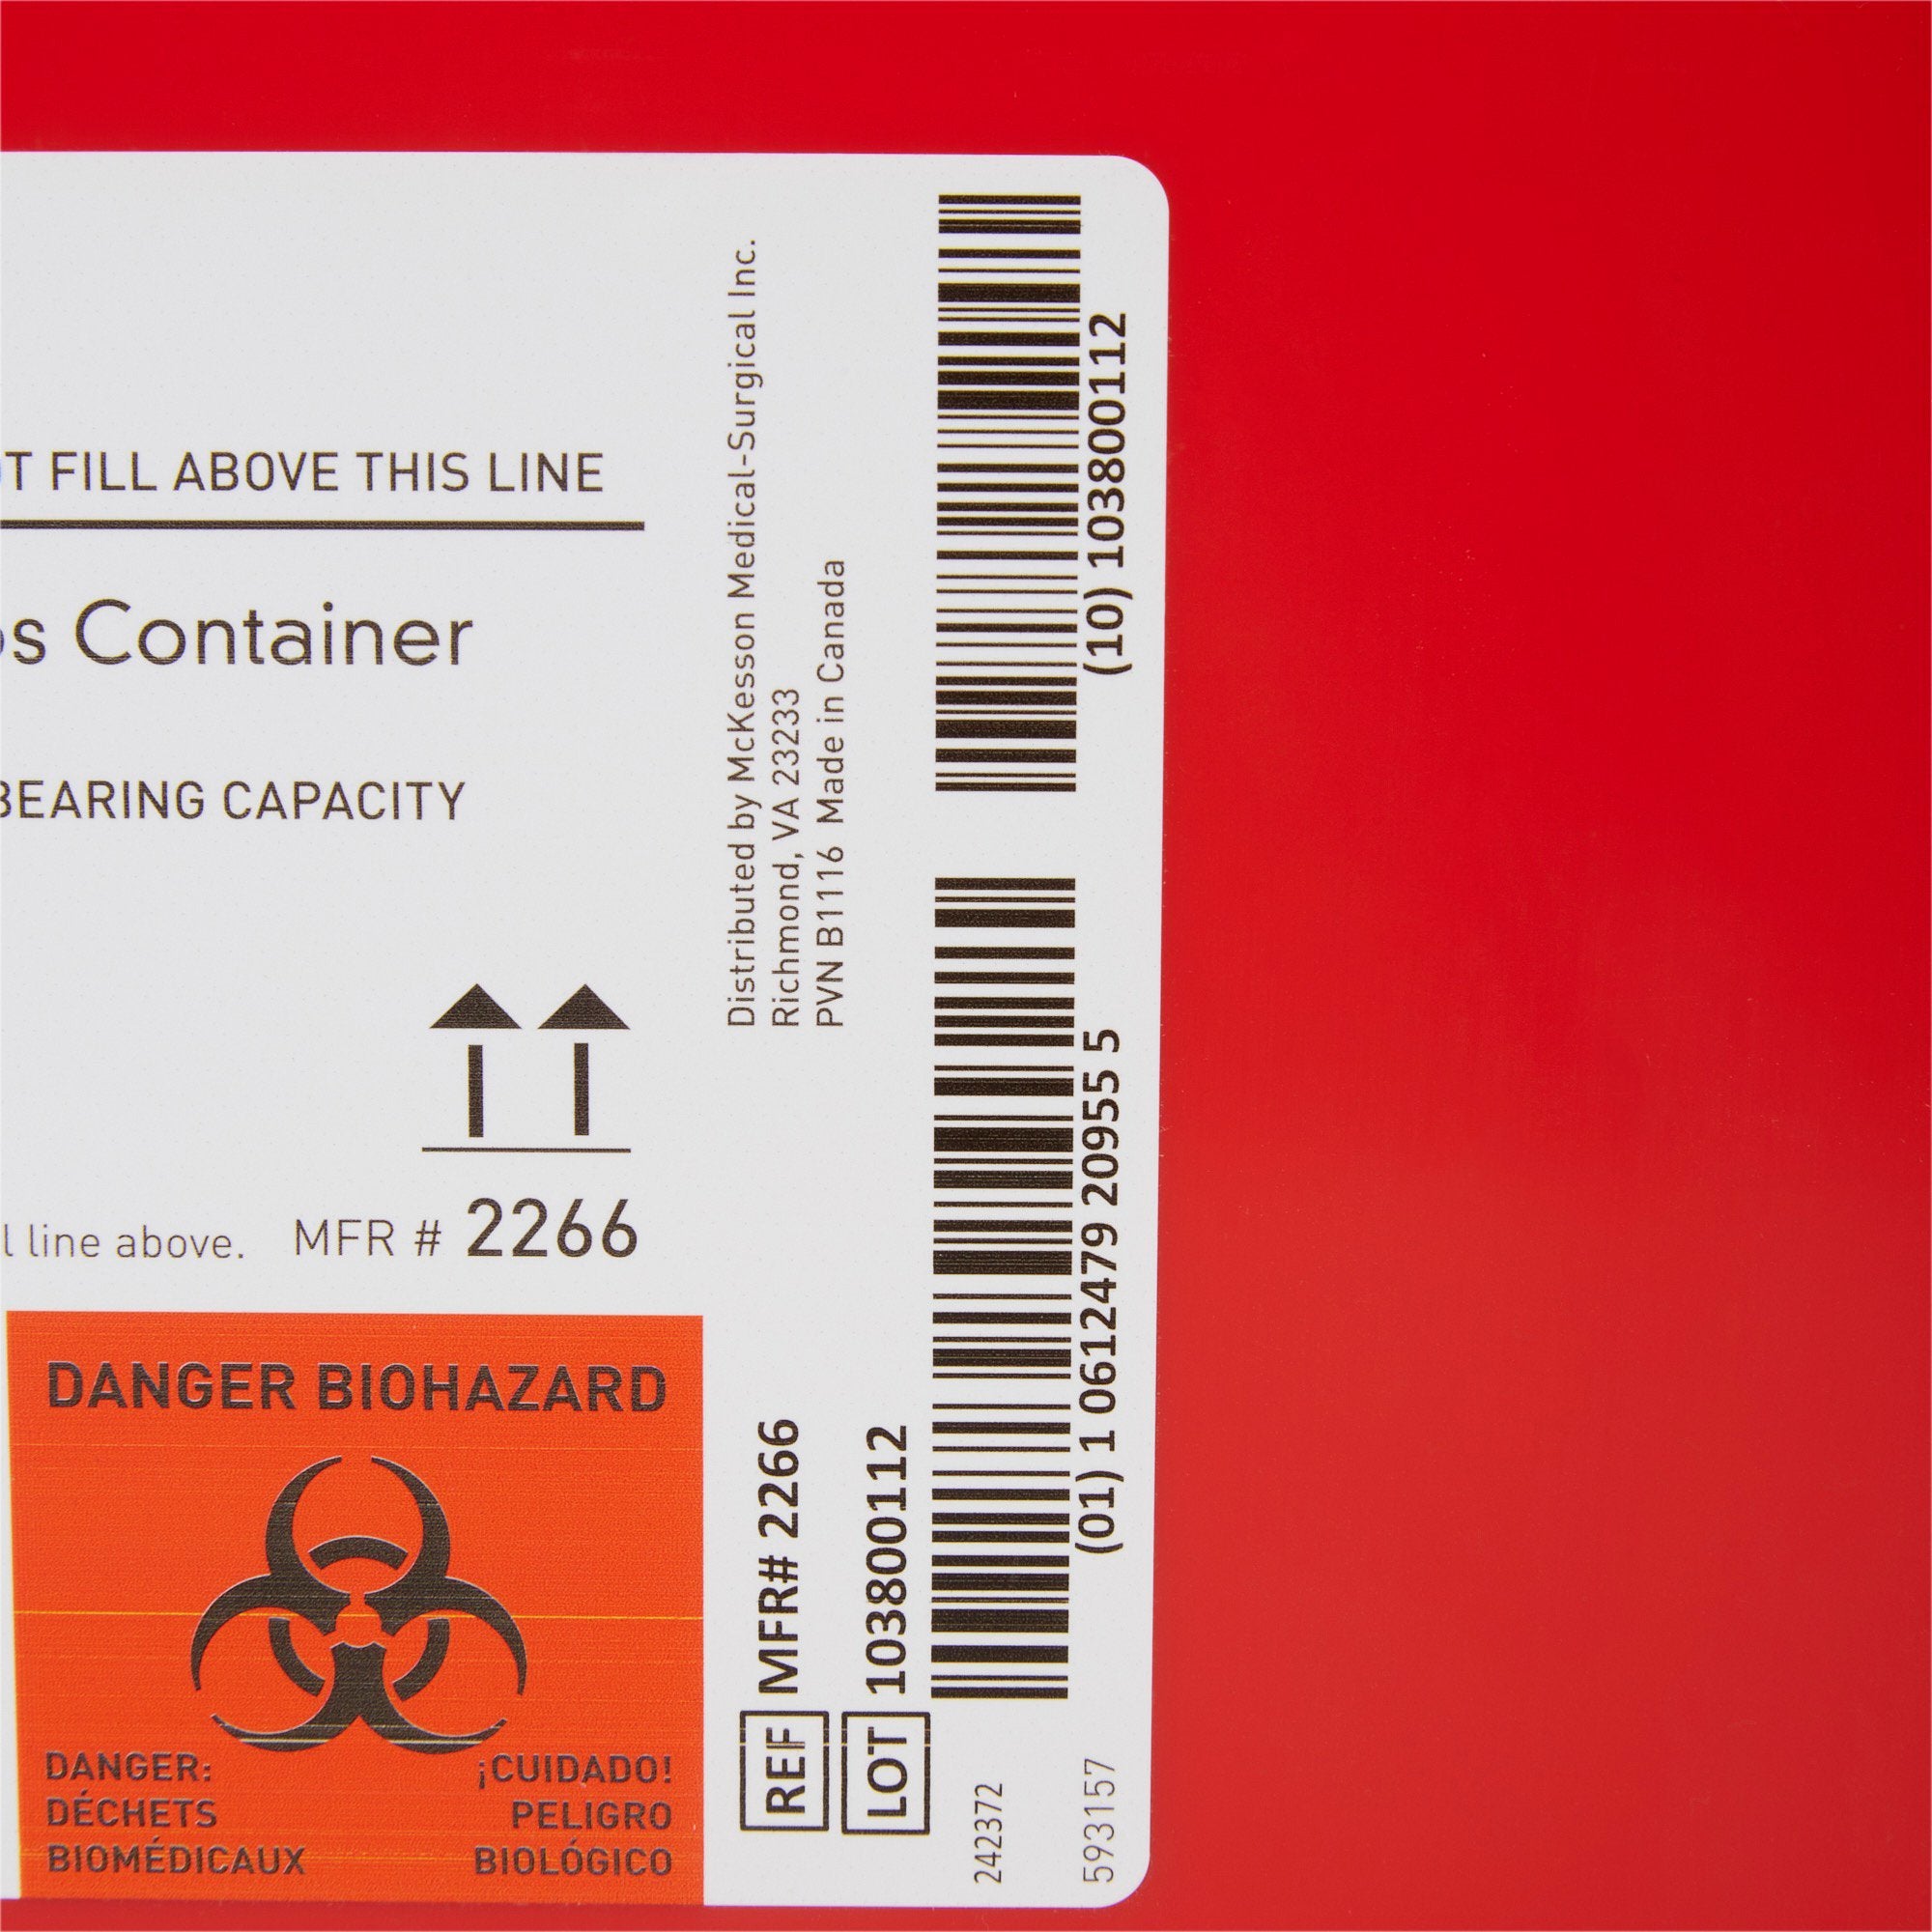 Sharps Container McKesson Prevent Red Base 13-1/2 H X 17-3/10 W X 13 L Inch Vertical Entry 8 Gallon